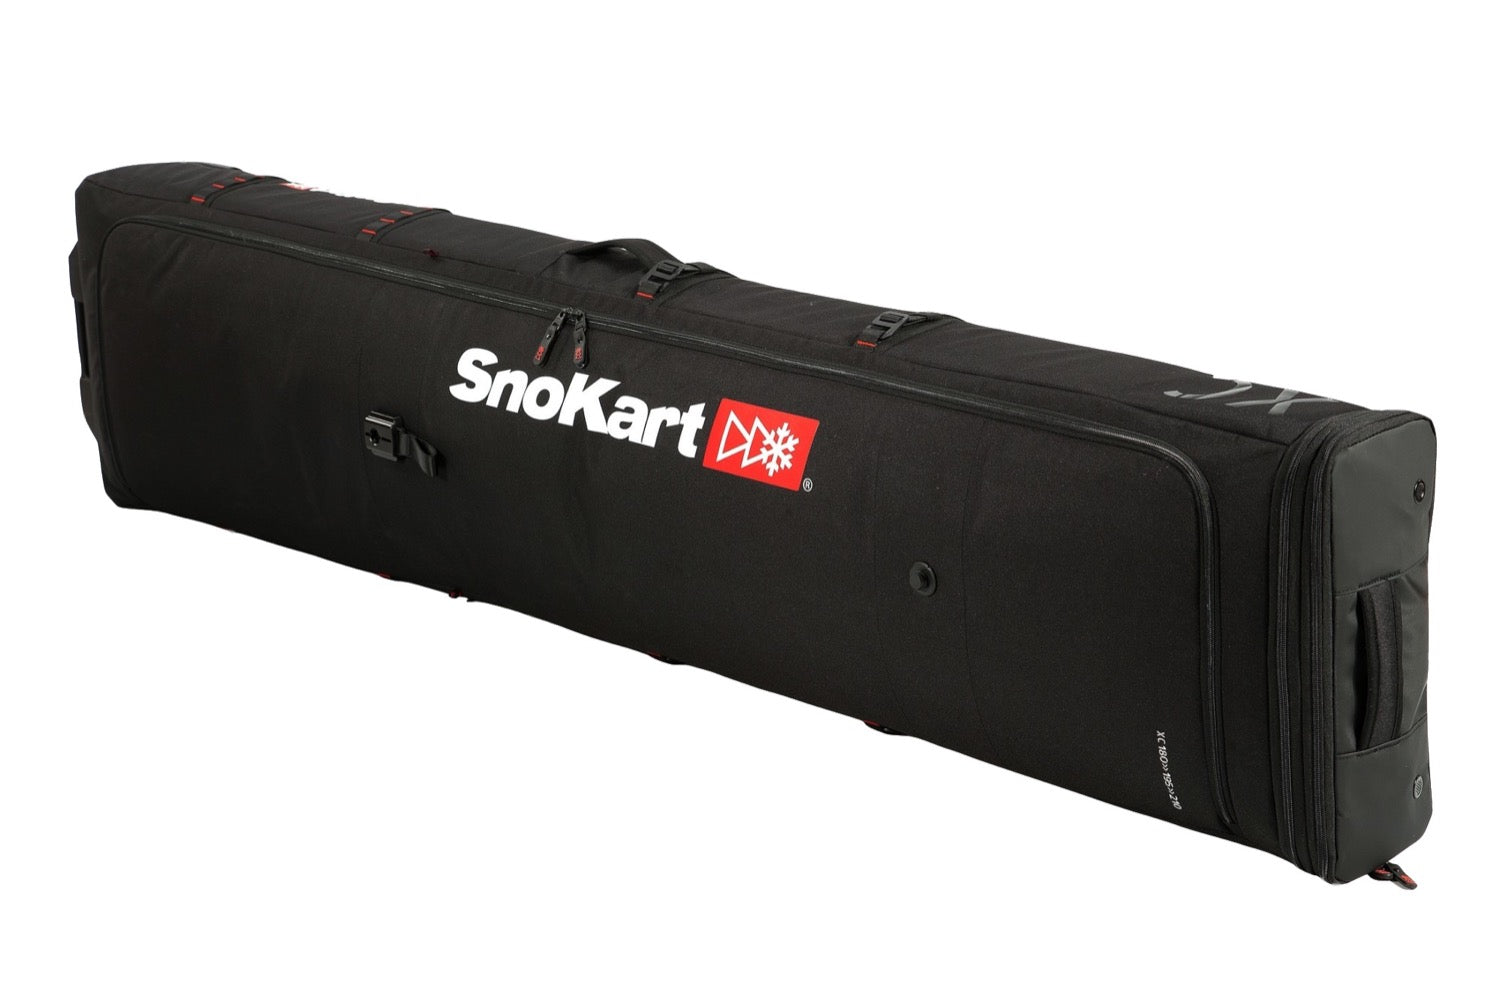 Snokart Kart Zoom Roller XC Ski/Snowboard Bag